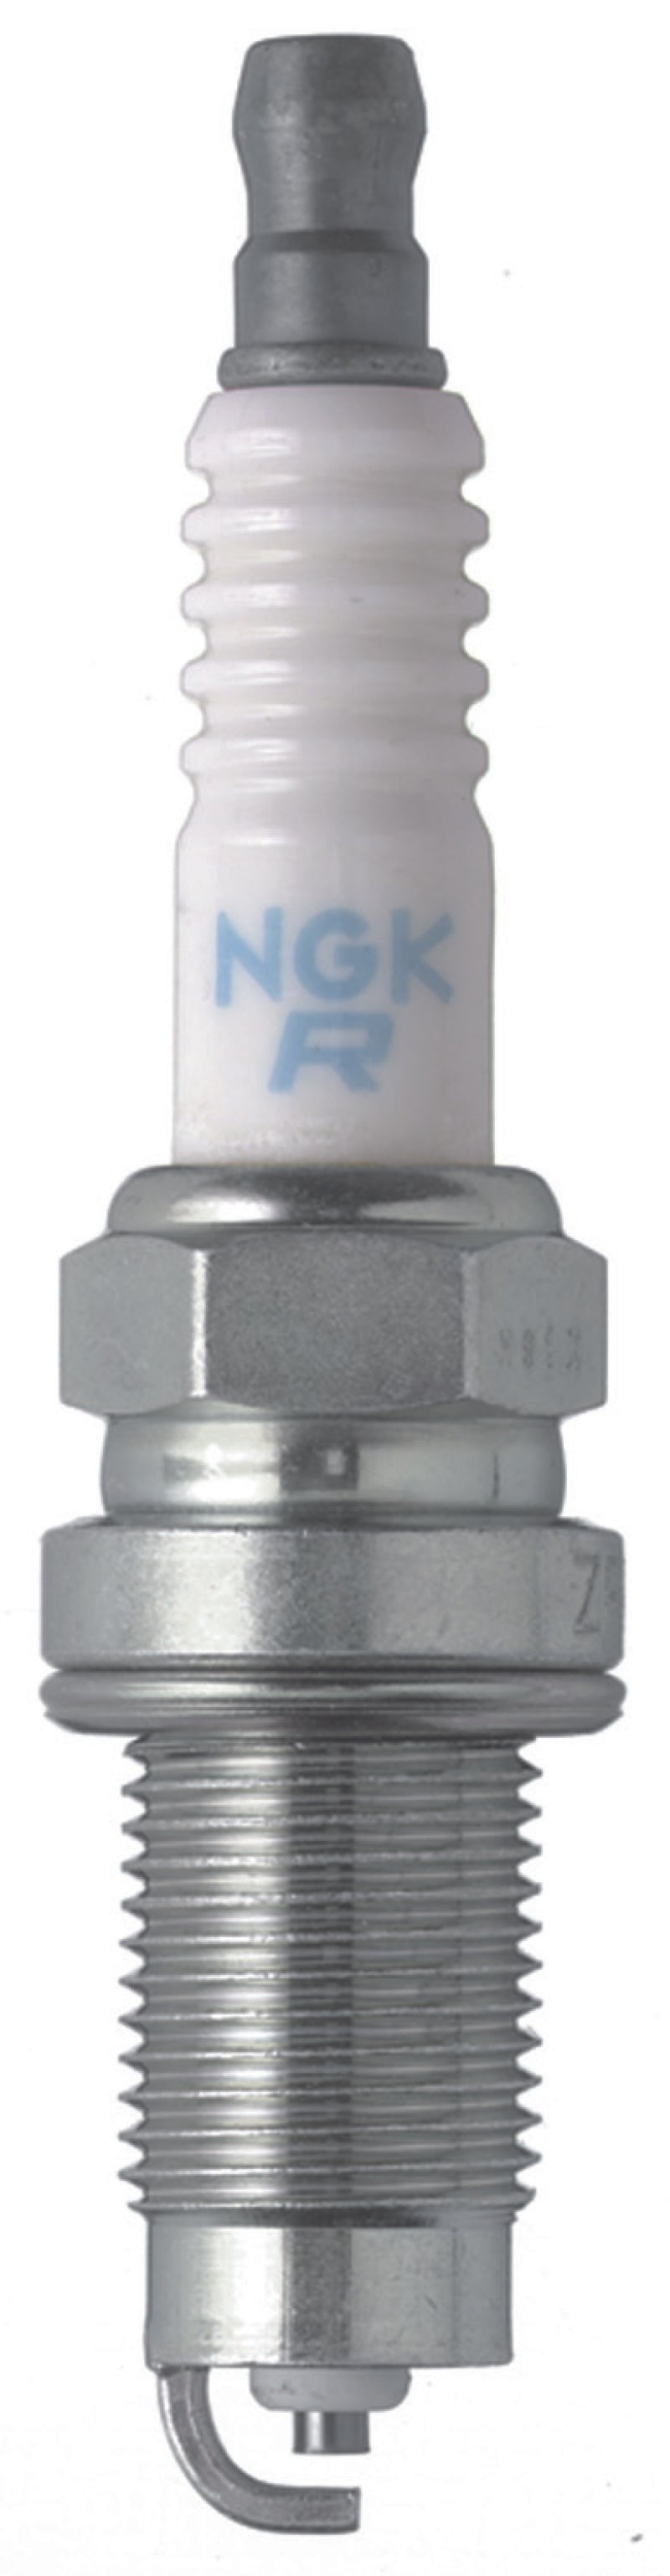 NGK V-Power Spark Plug Box of 4 (ZFRSE-11)